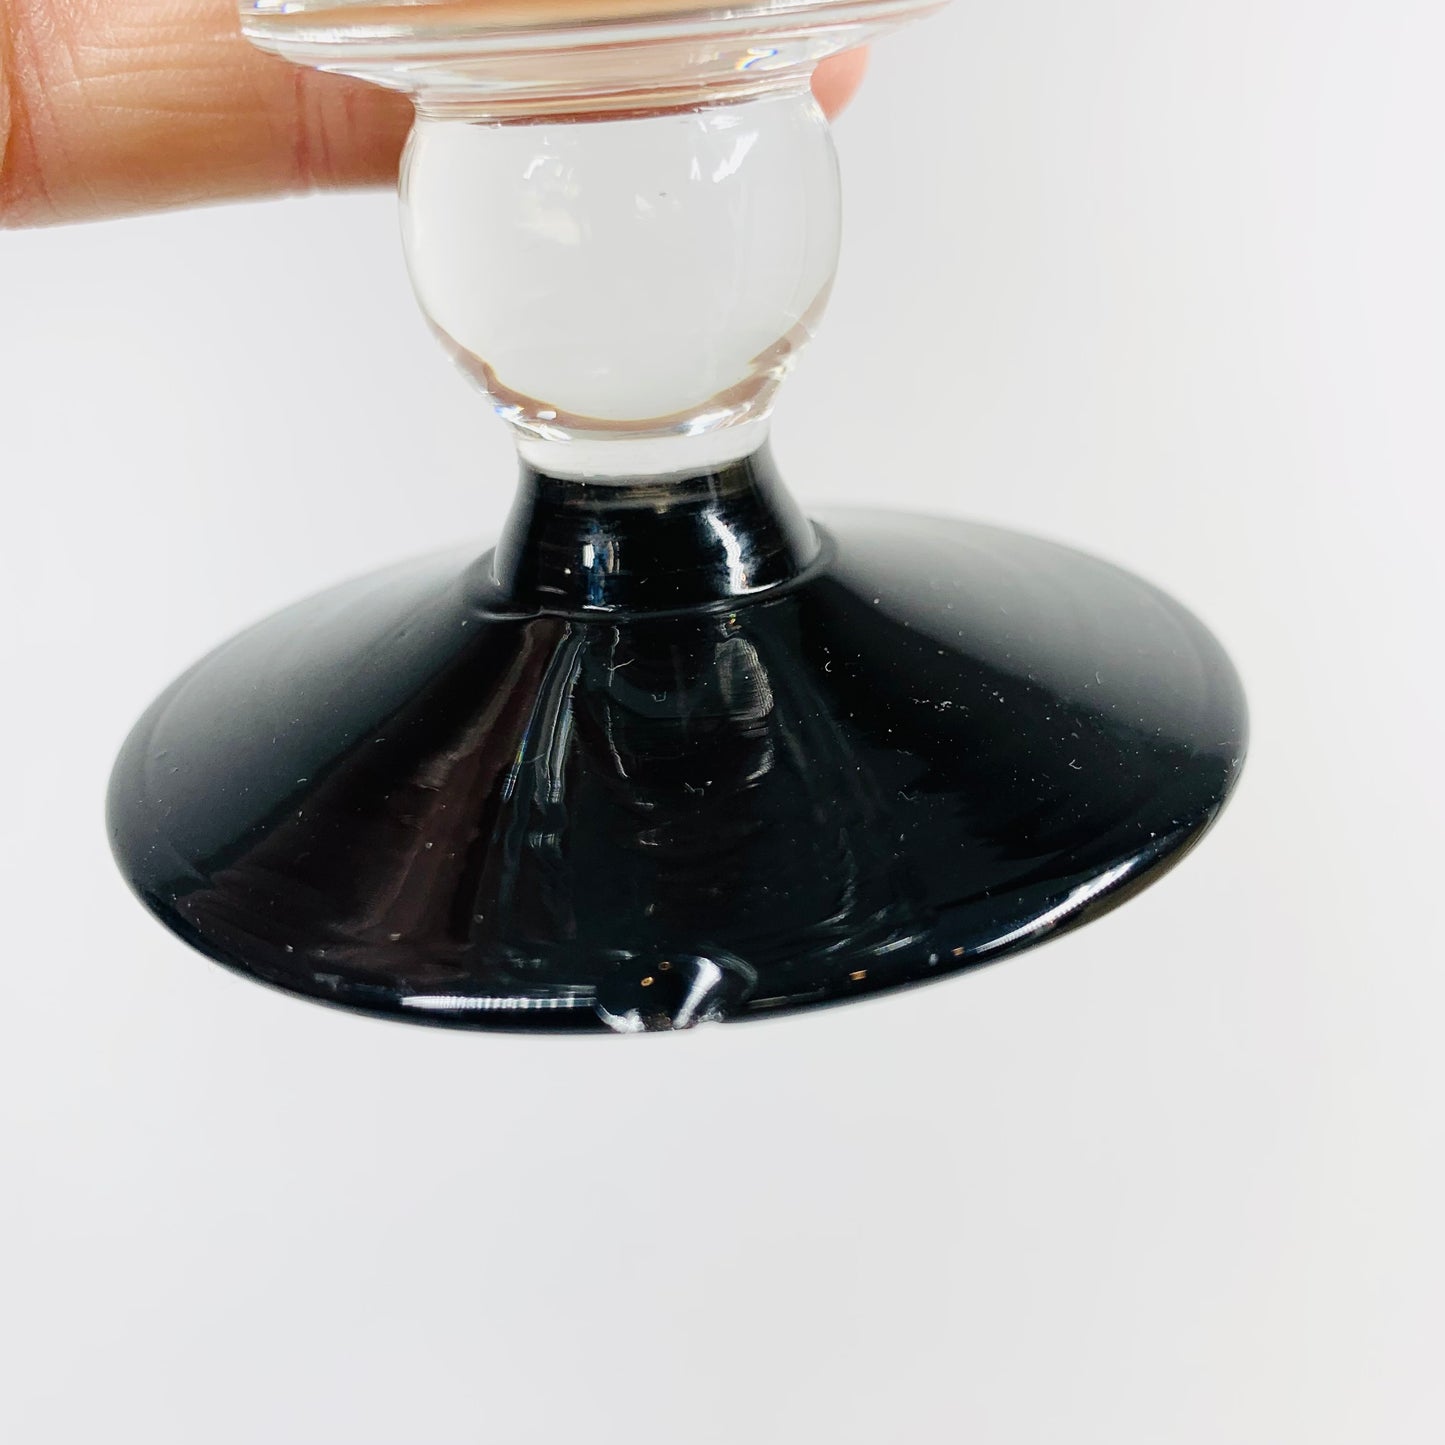 Antique etched short stem wine/cocktail glasses with black foot